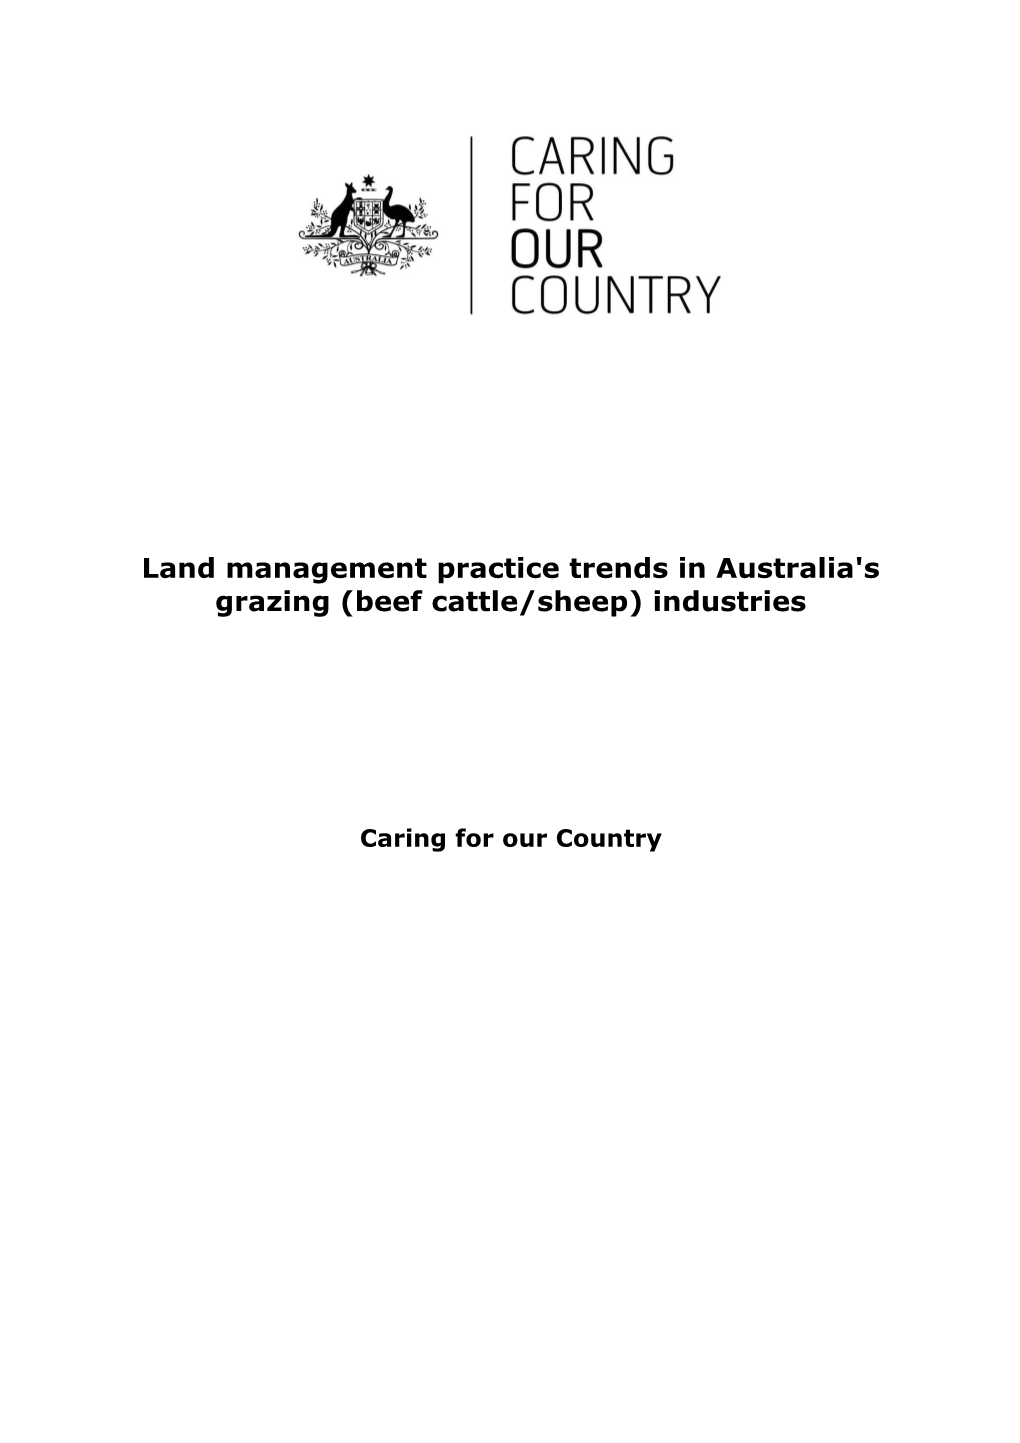 Land Management Practice Trends in Australia's Grazing (Beef Cattle/Sheep) Industries